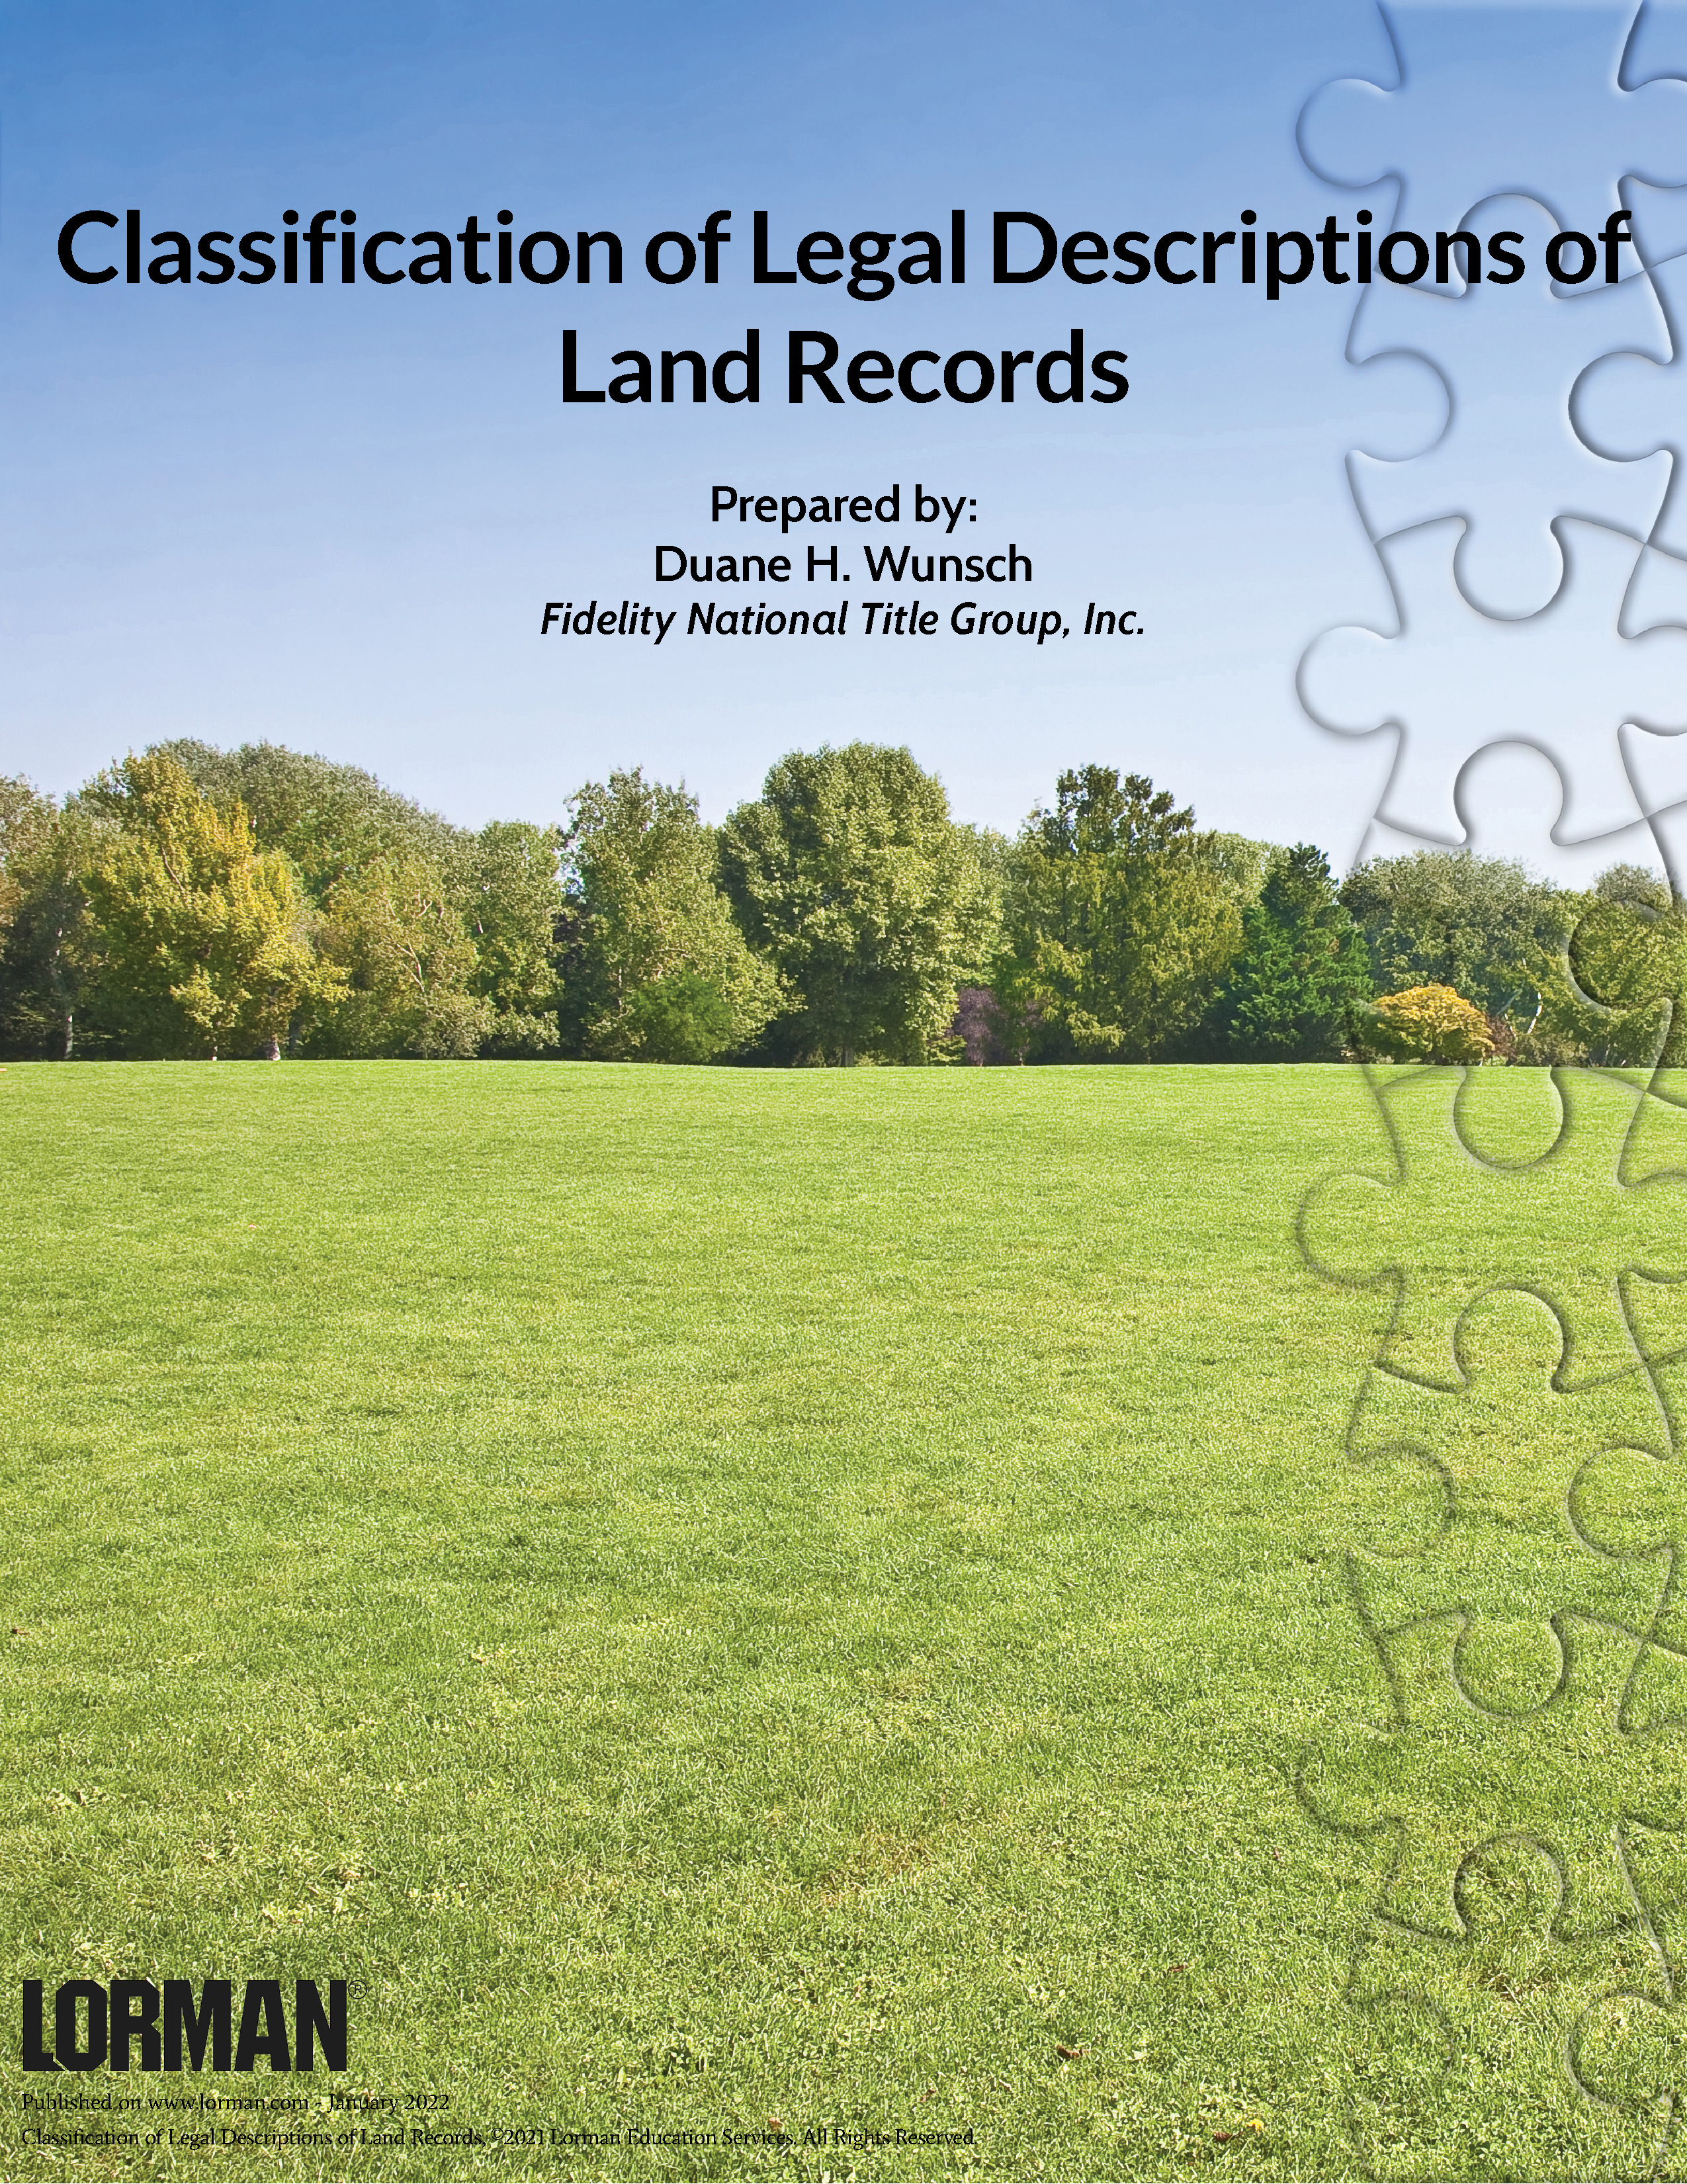 Classification of Legal Descriptions of Land Records